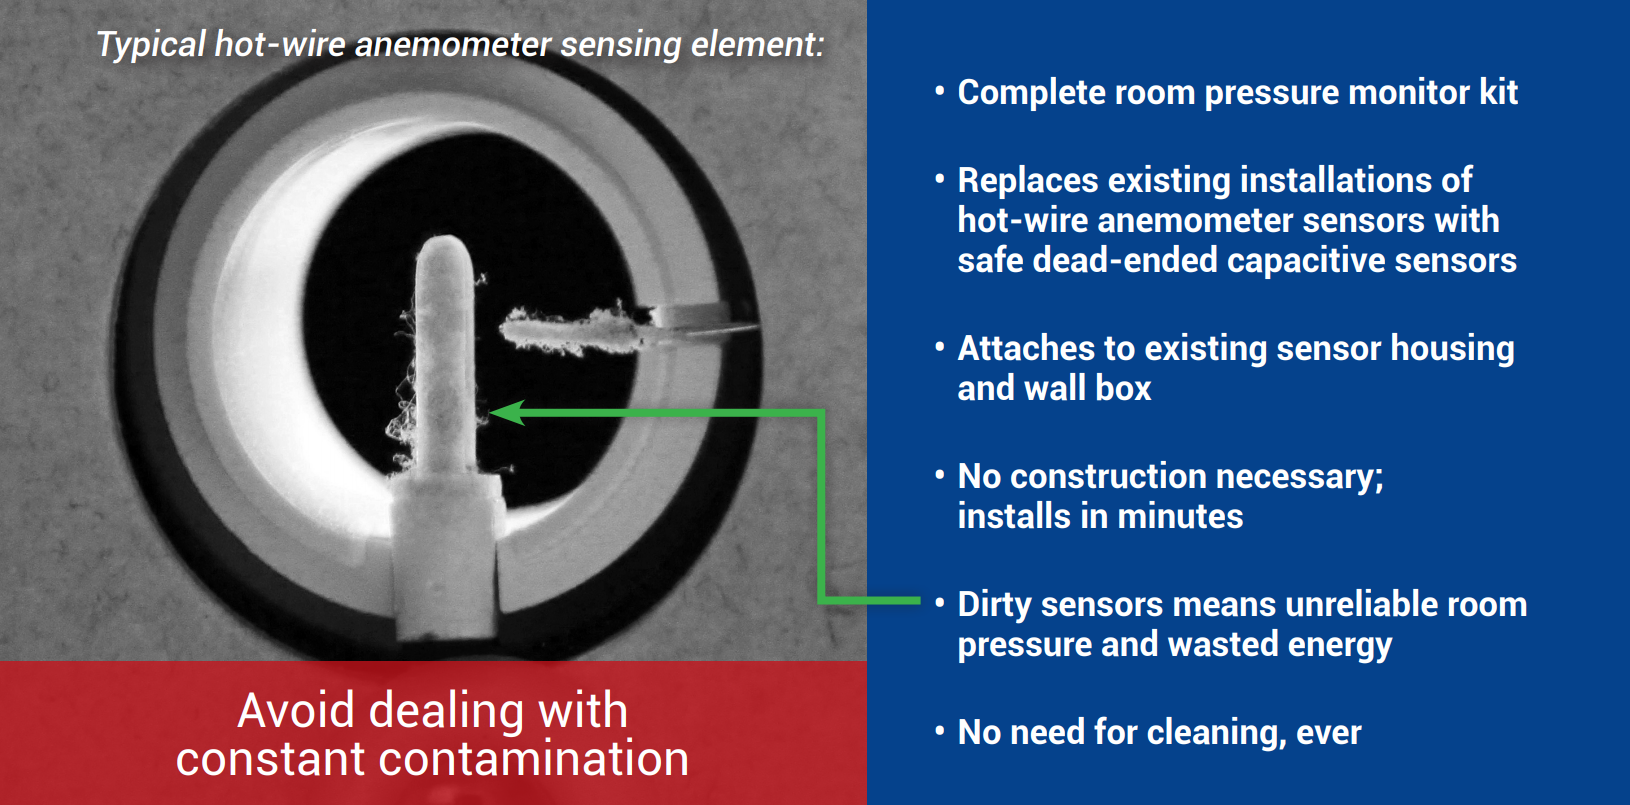 Dirty probe sensor in a room pressure monitor